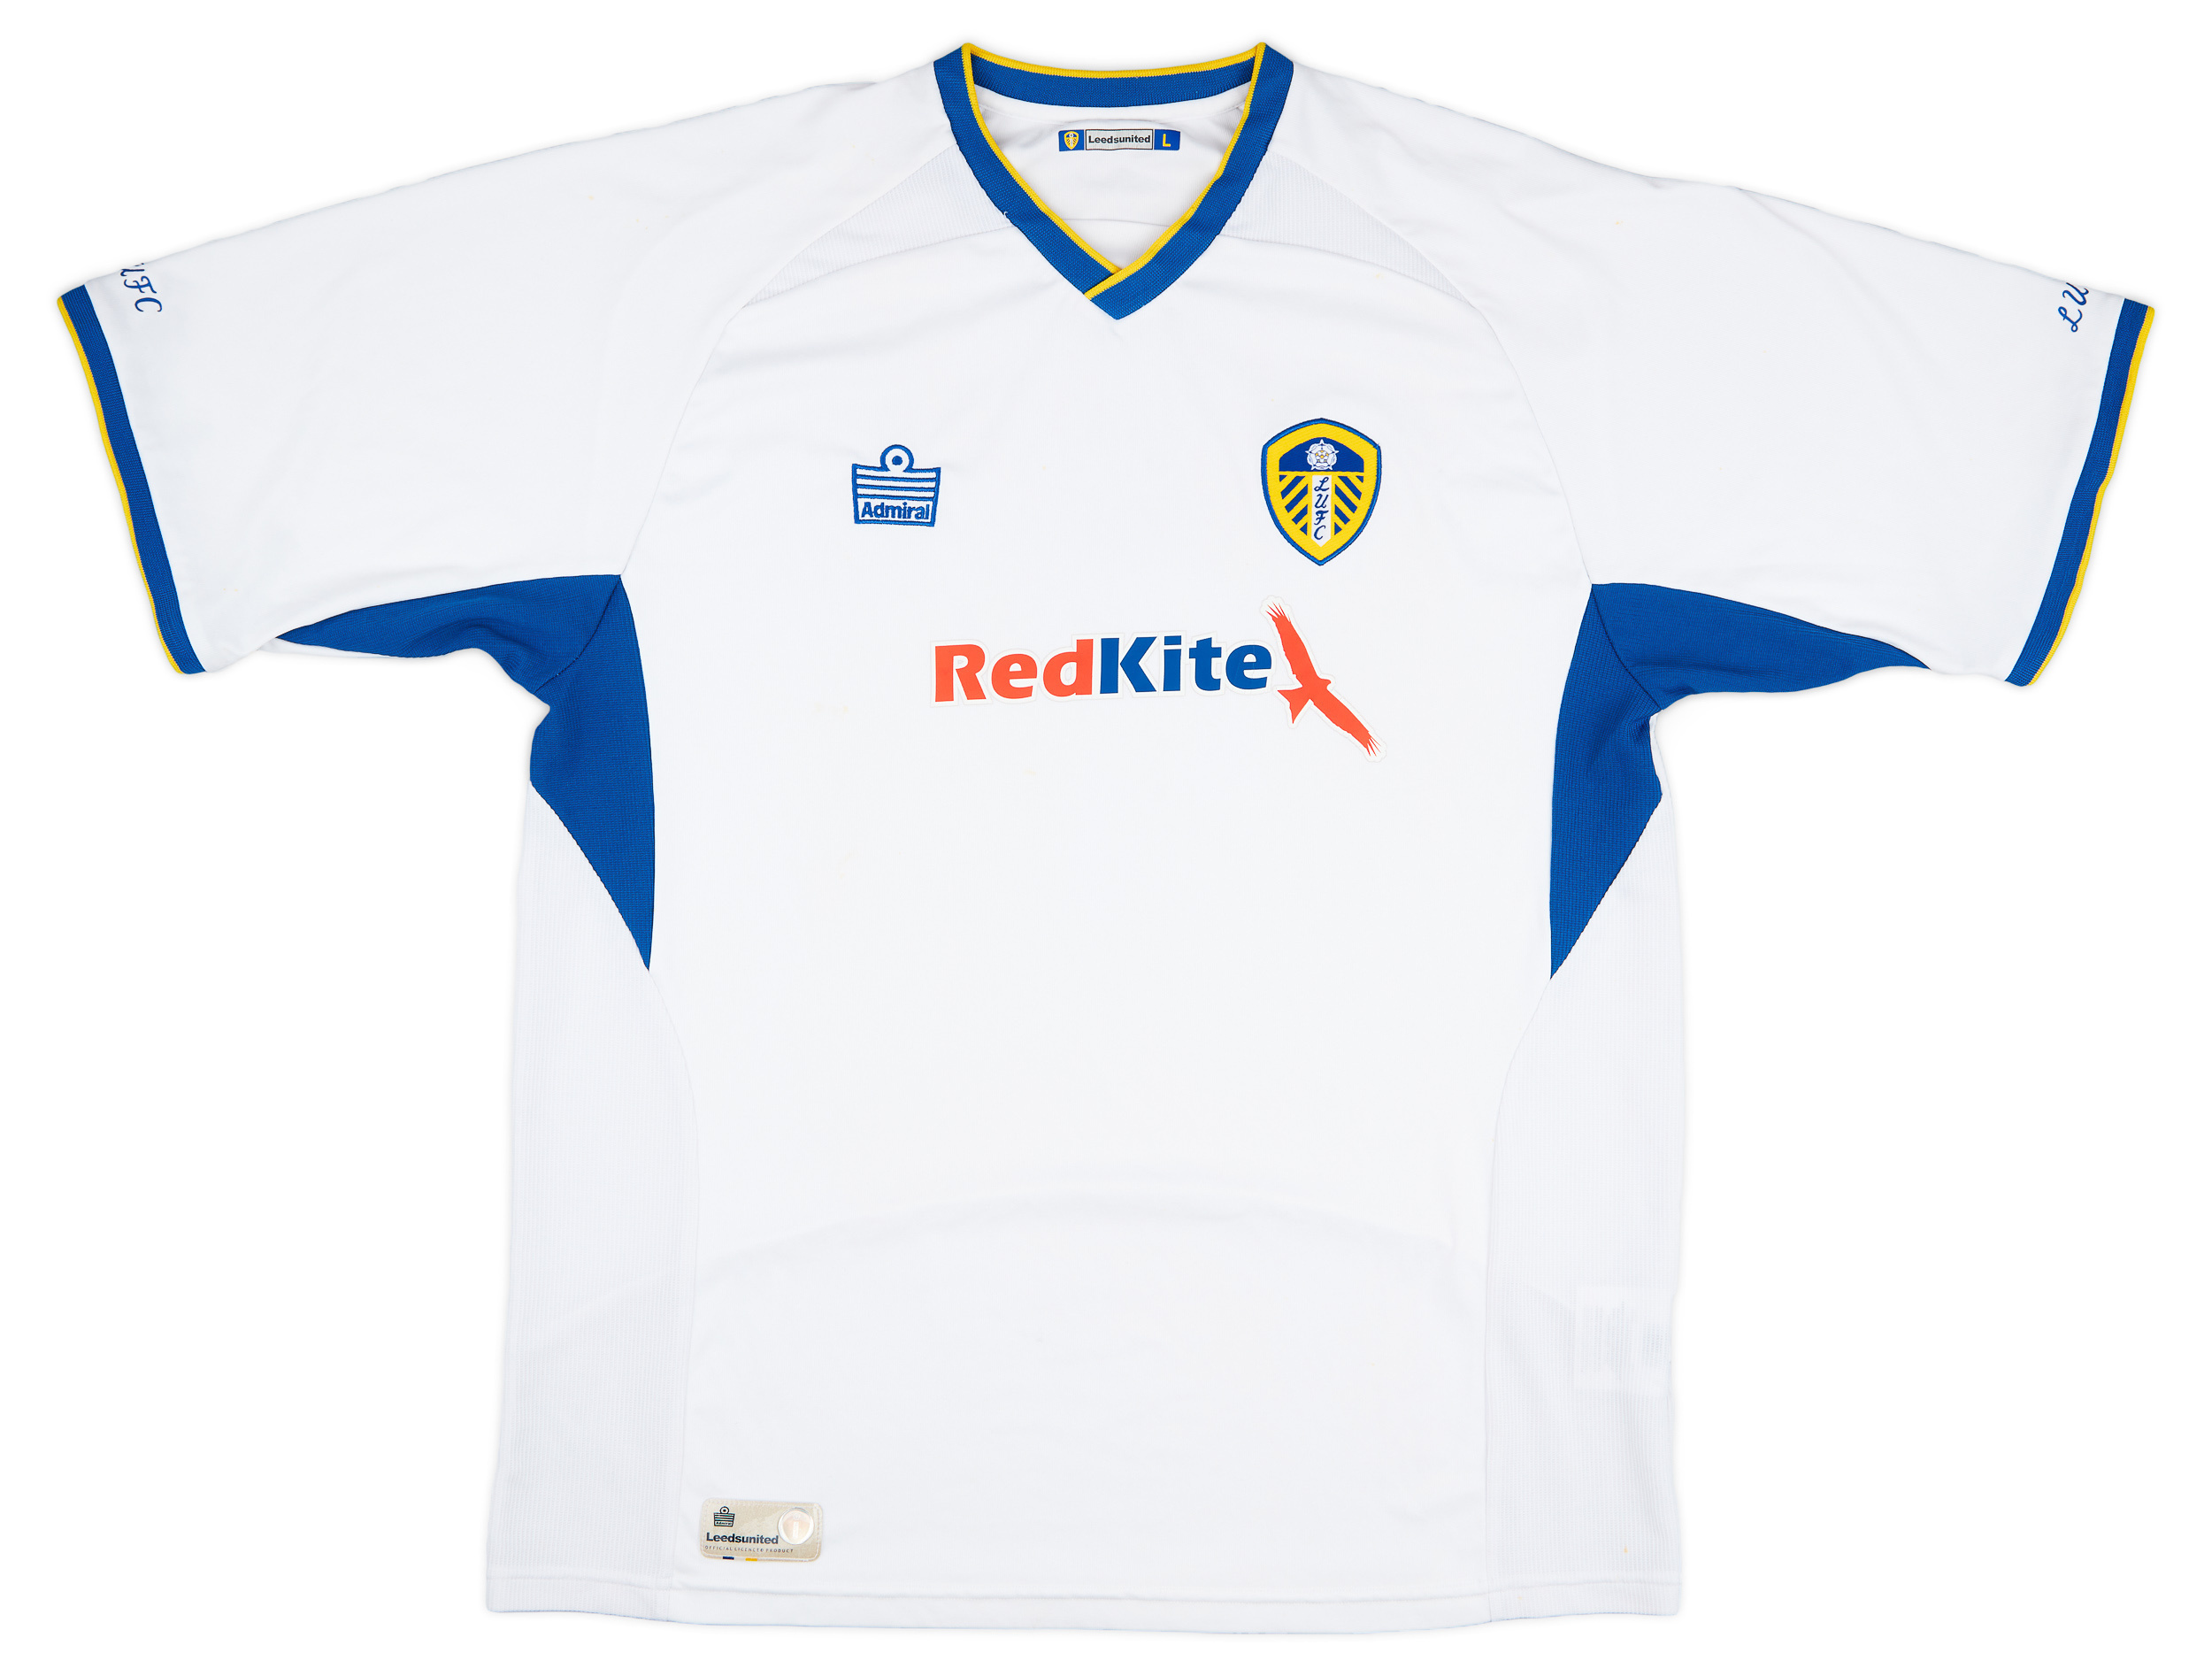 2007-08 Leeds United Home Shirt - Very Good 7/10 - ()